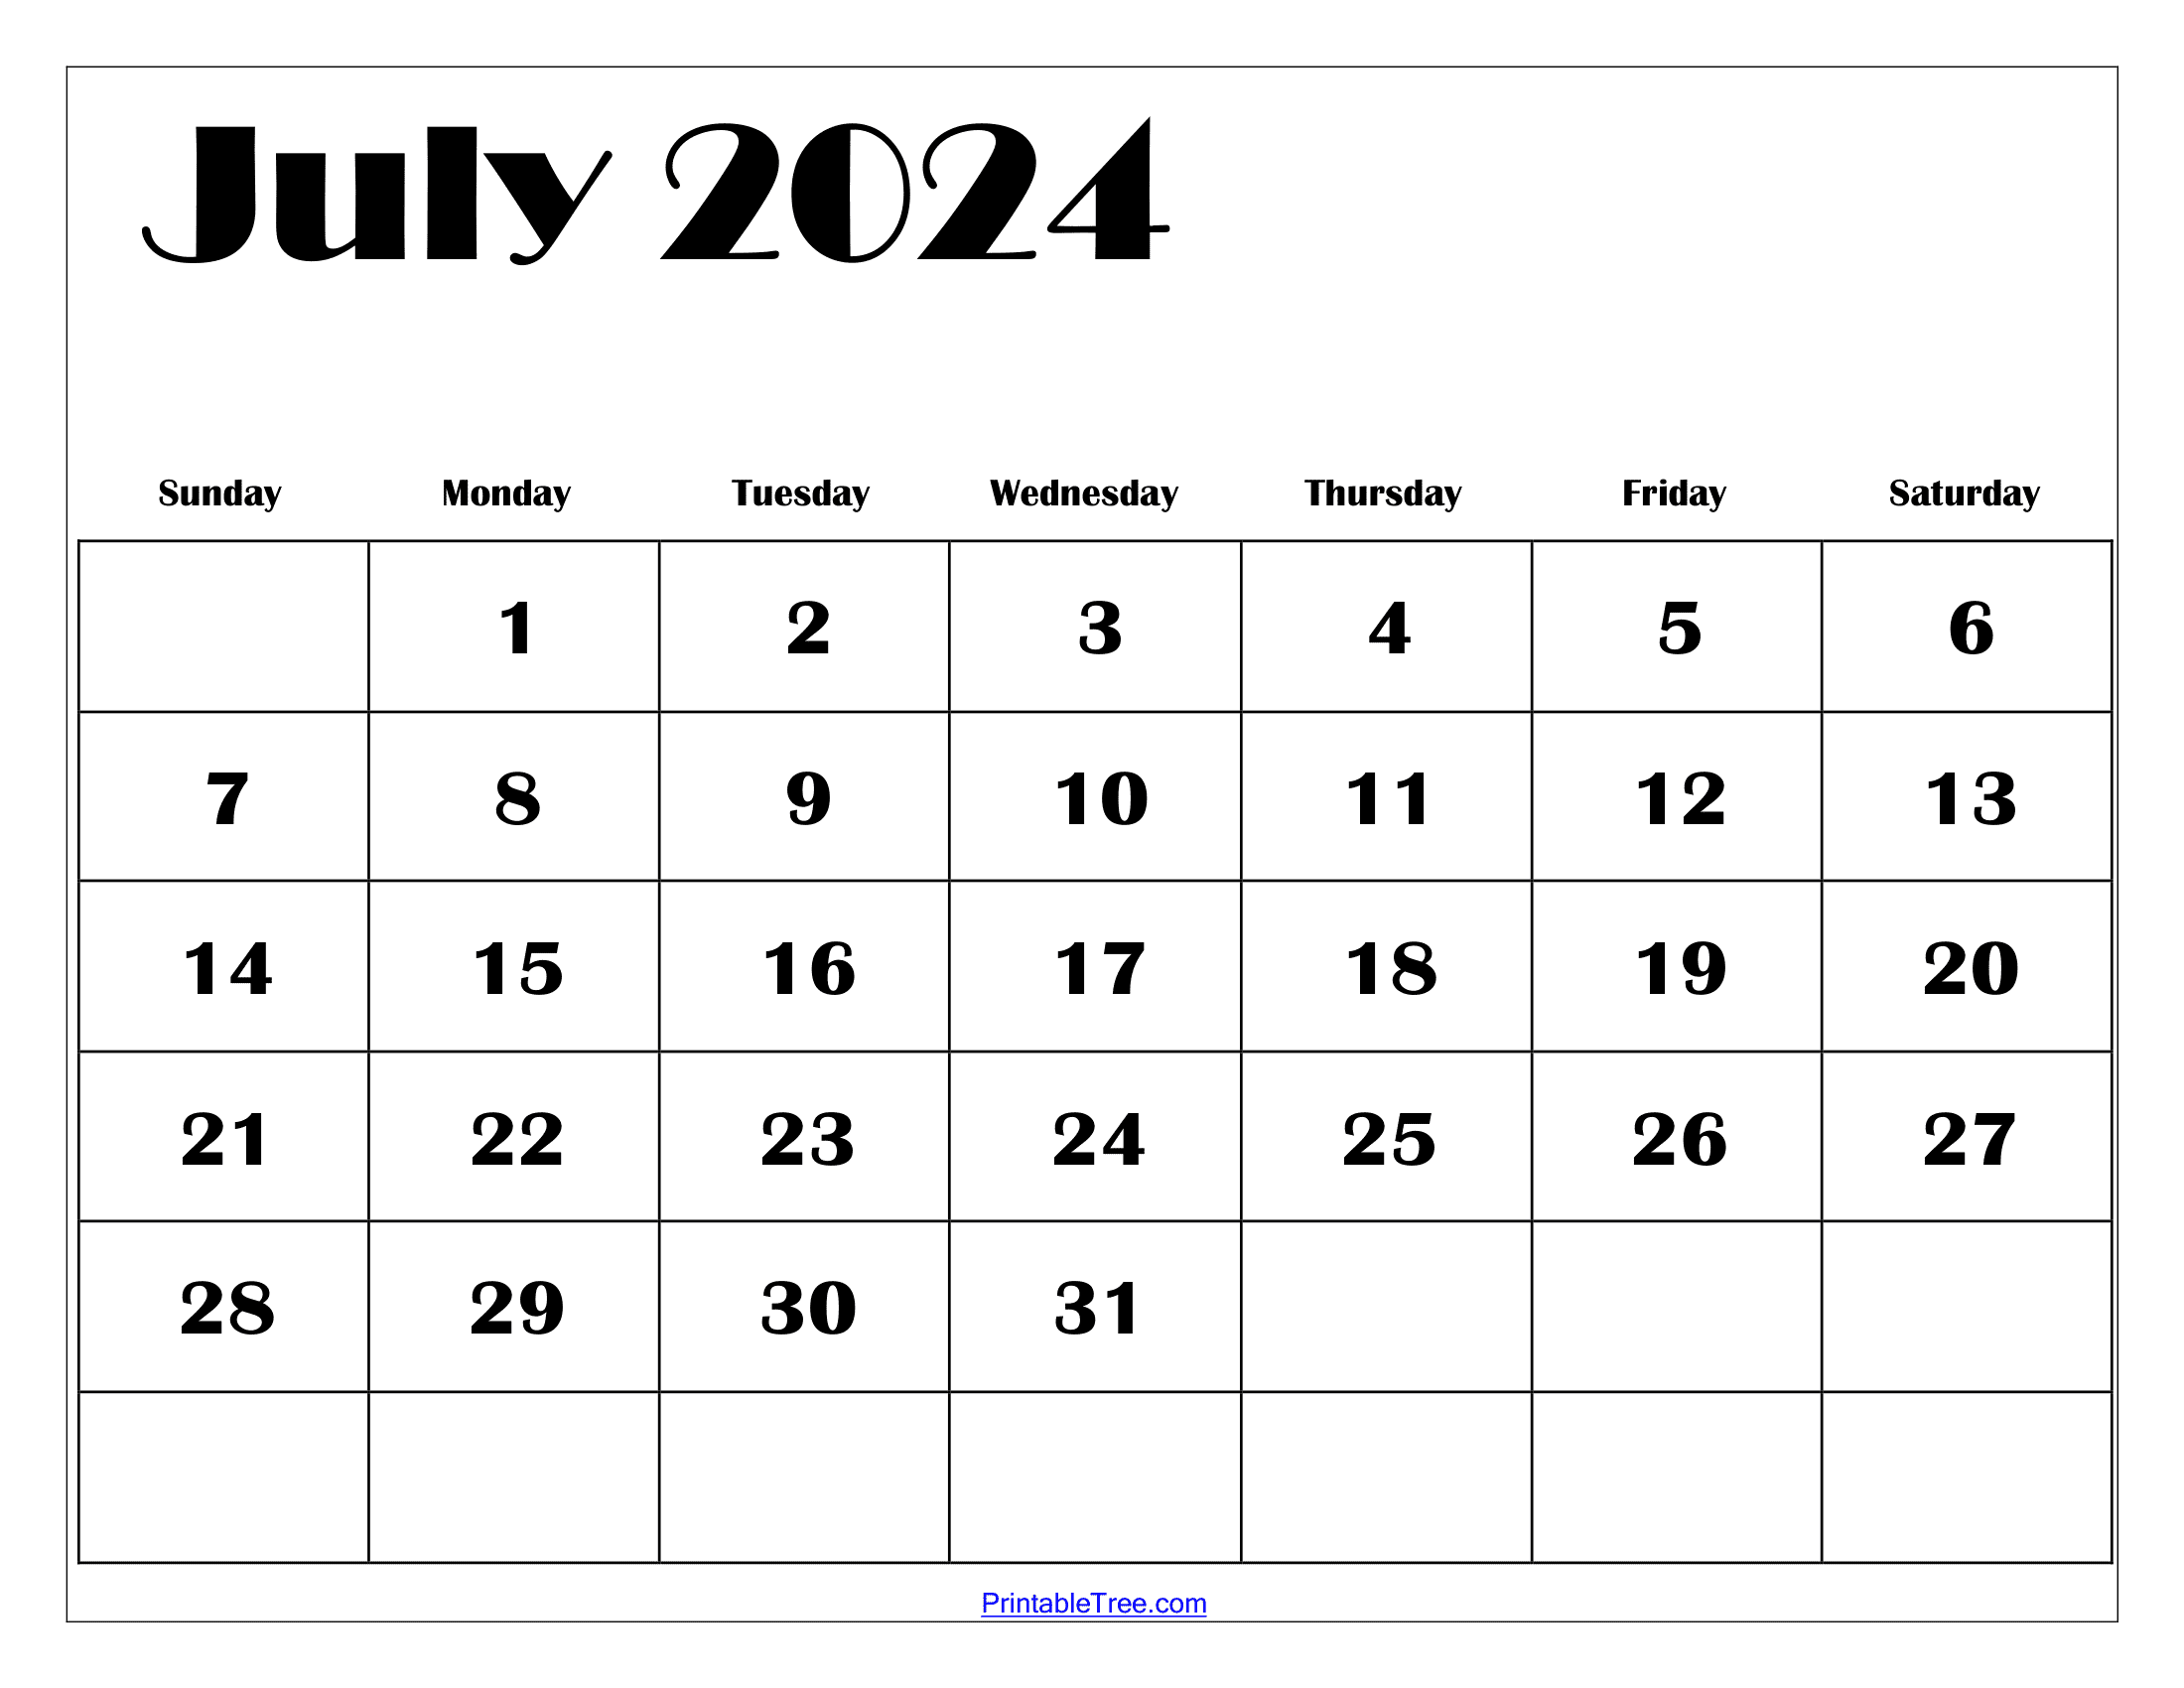 July 2024 Calendar Printable Pdf With Holidays Free Template for July Calendar 2024 Printable Free